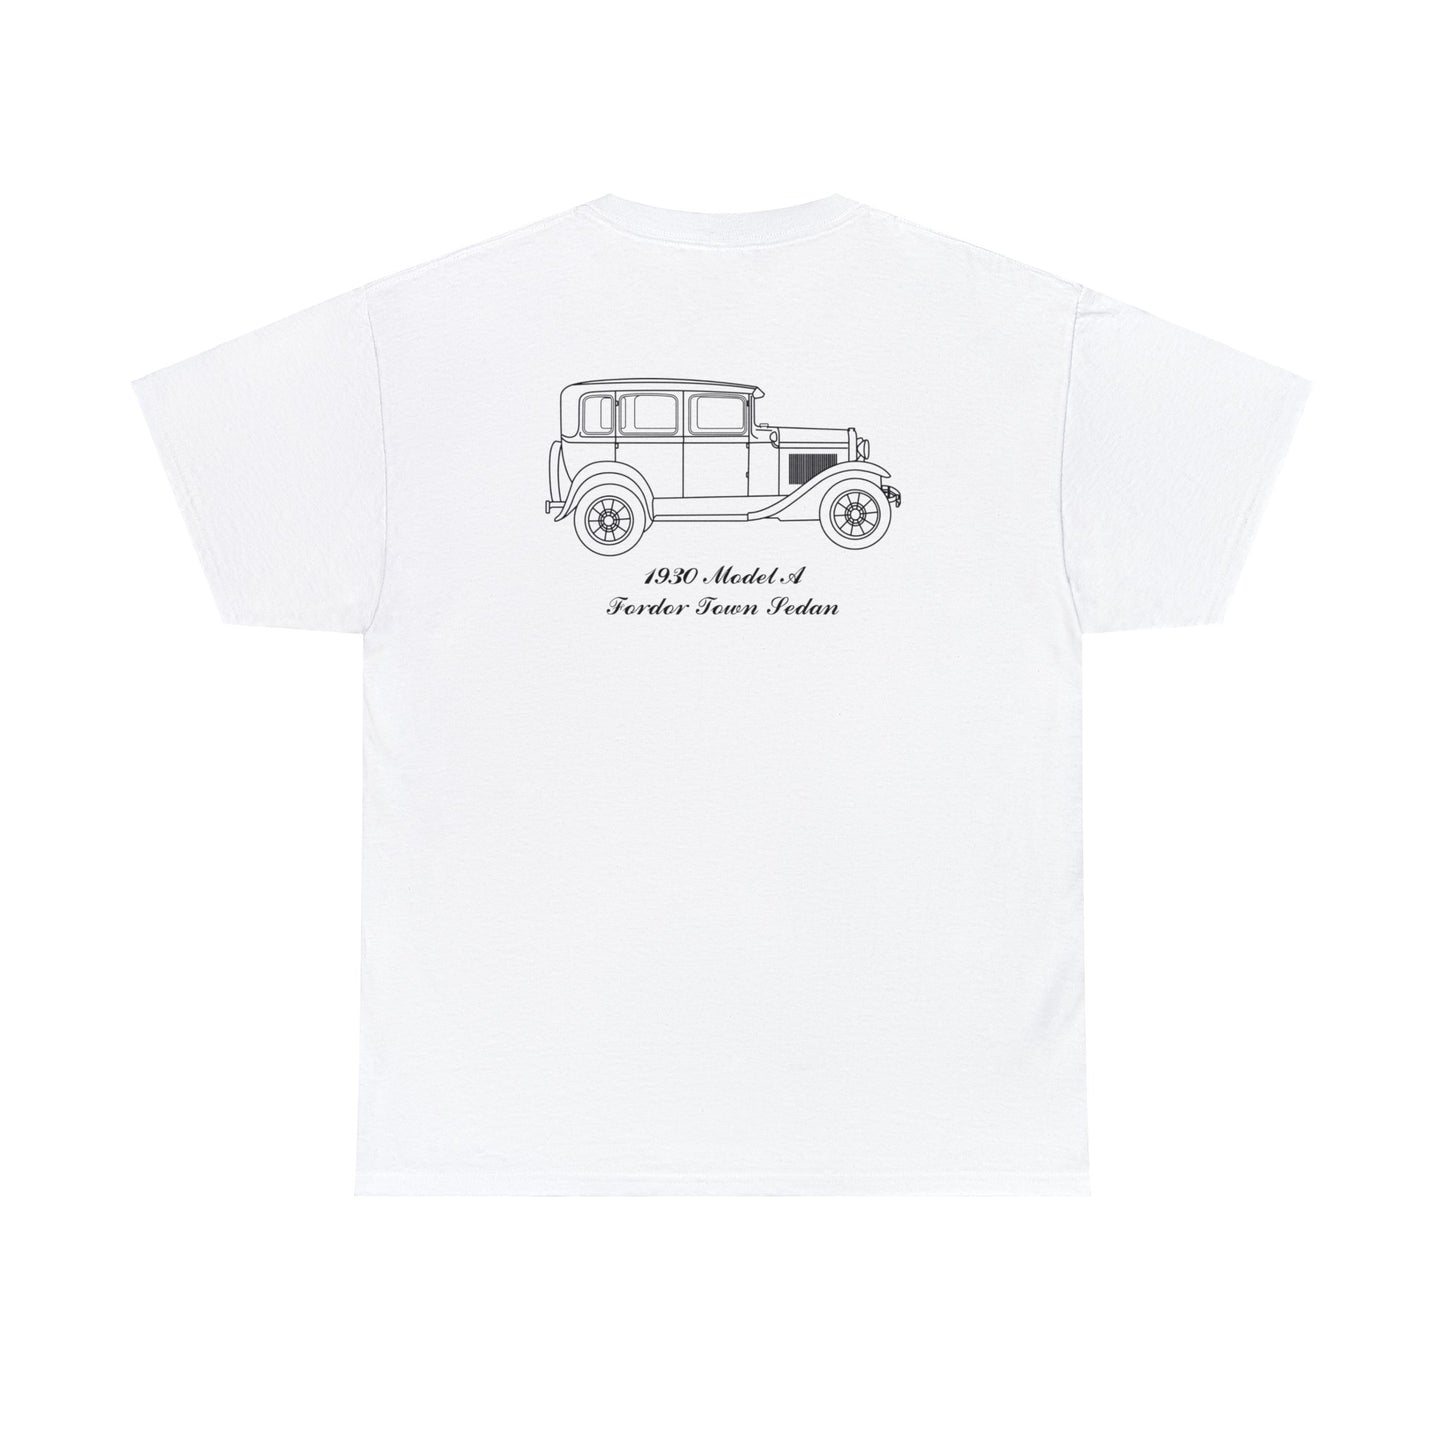 1930 Fordor Town Sedan Ultra Cotton T-Shirt